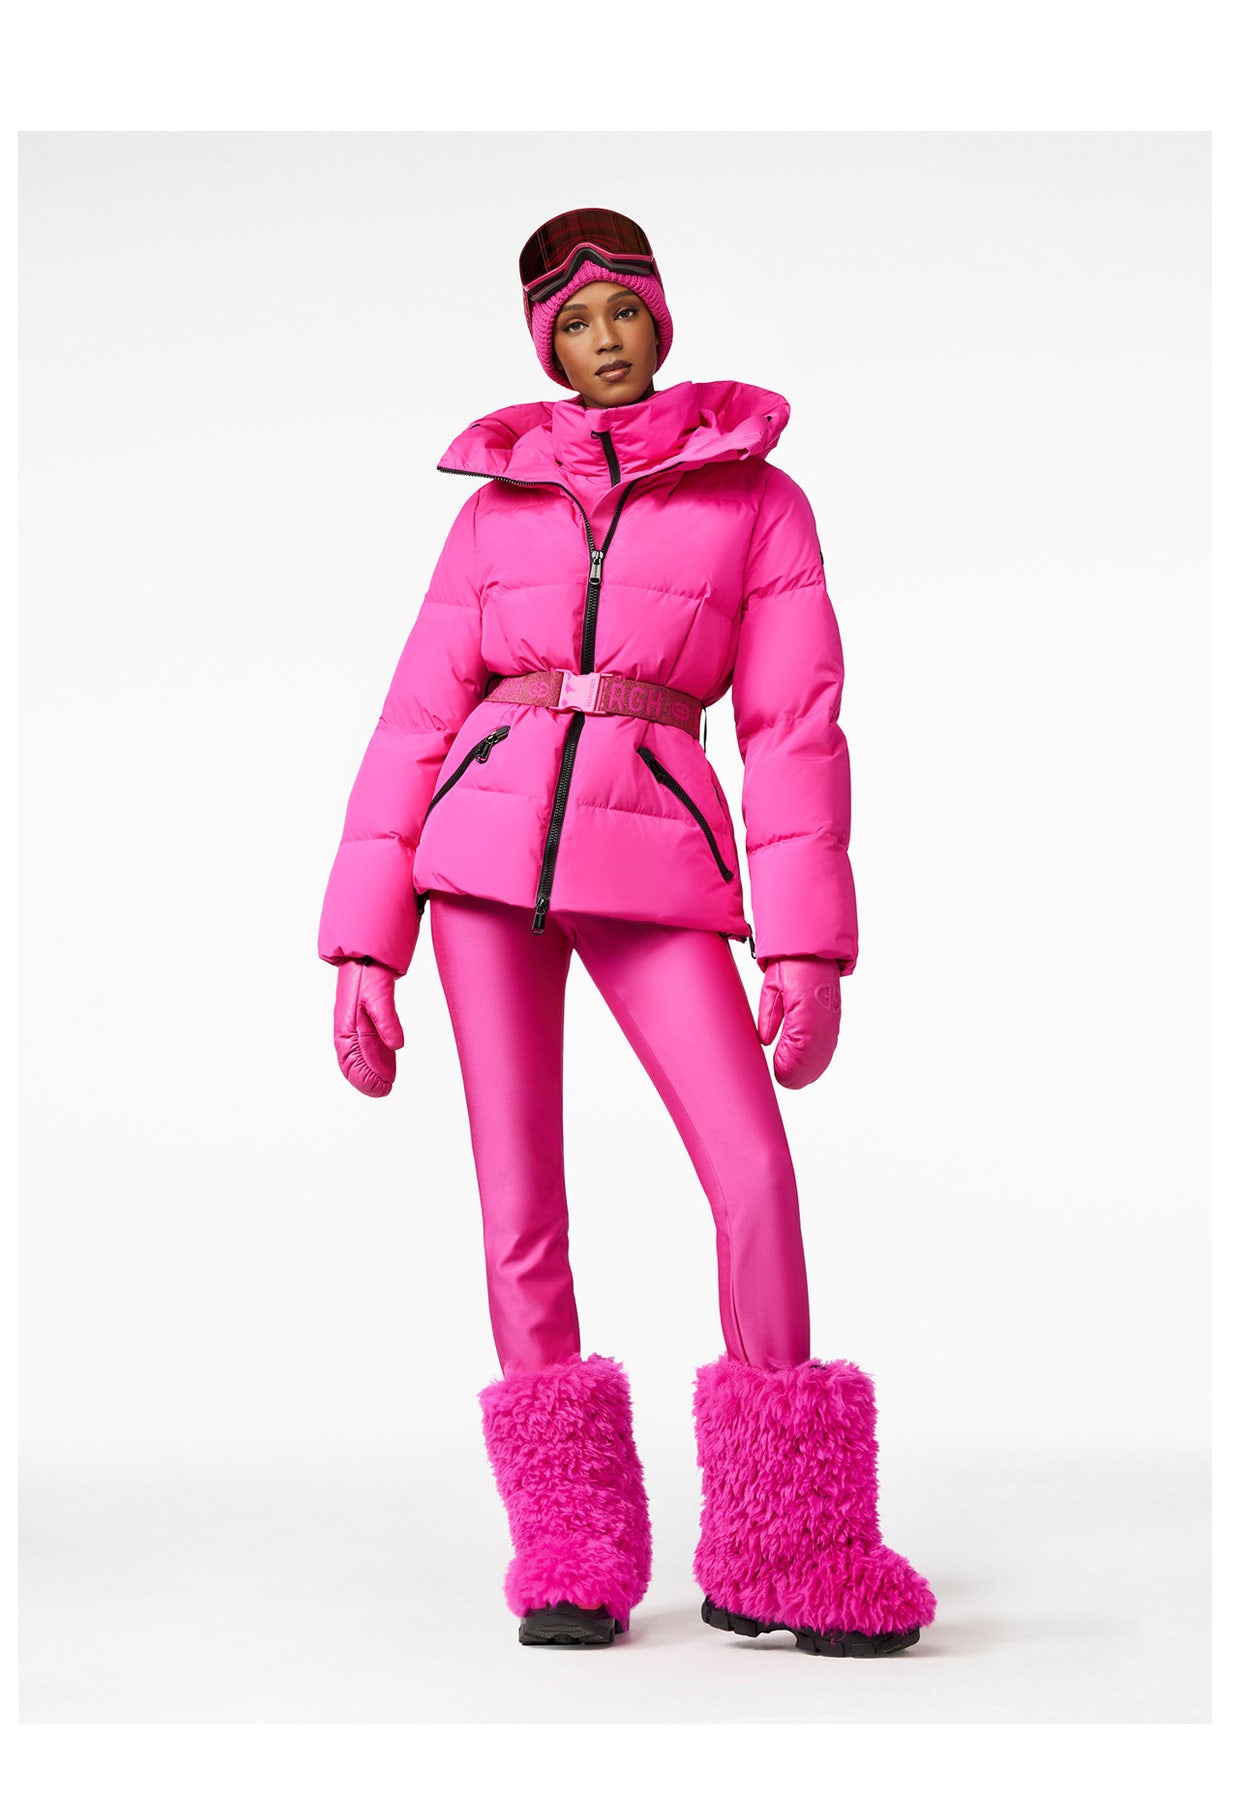 Goldbergh Snowmass Downfilled Ski Jacket in Pink